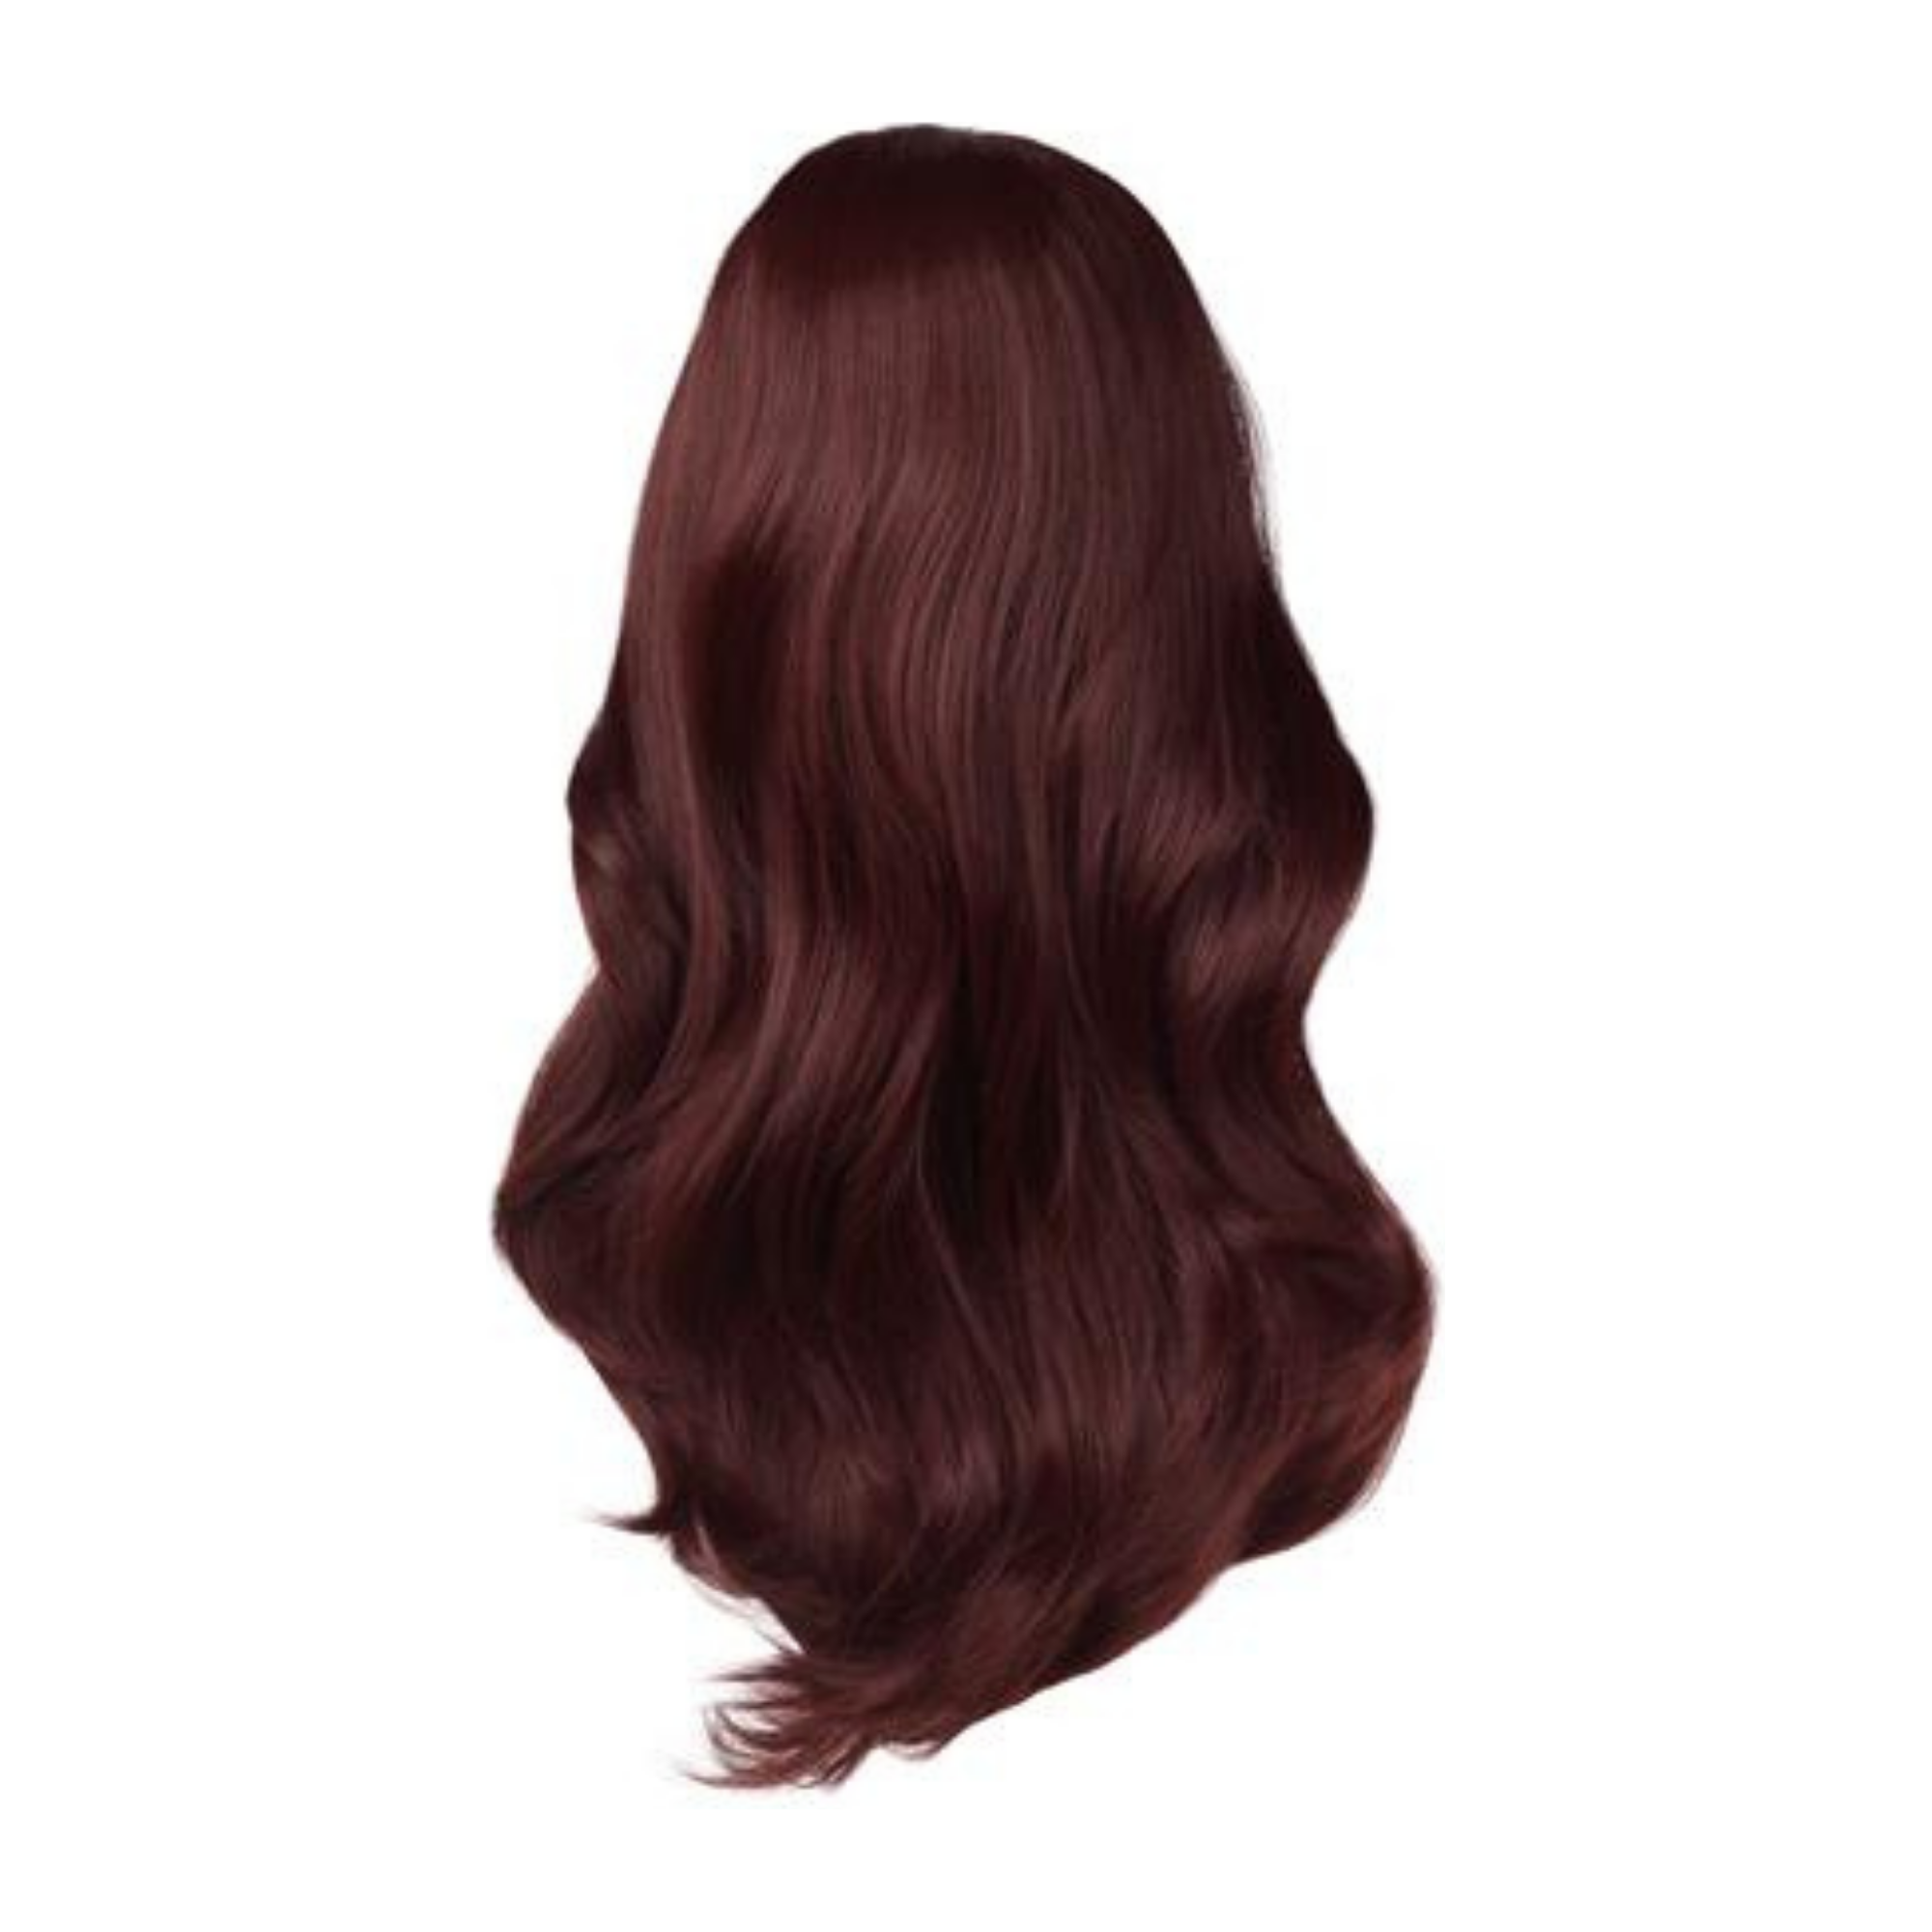 image of hair rehab london half wig hairpiece in shade burgundy